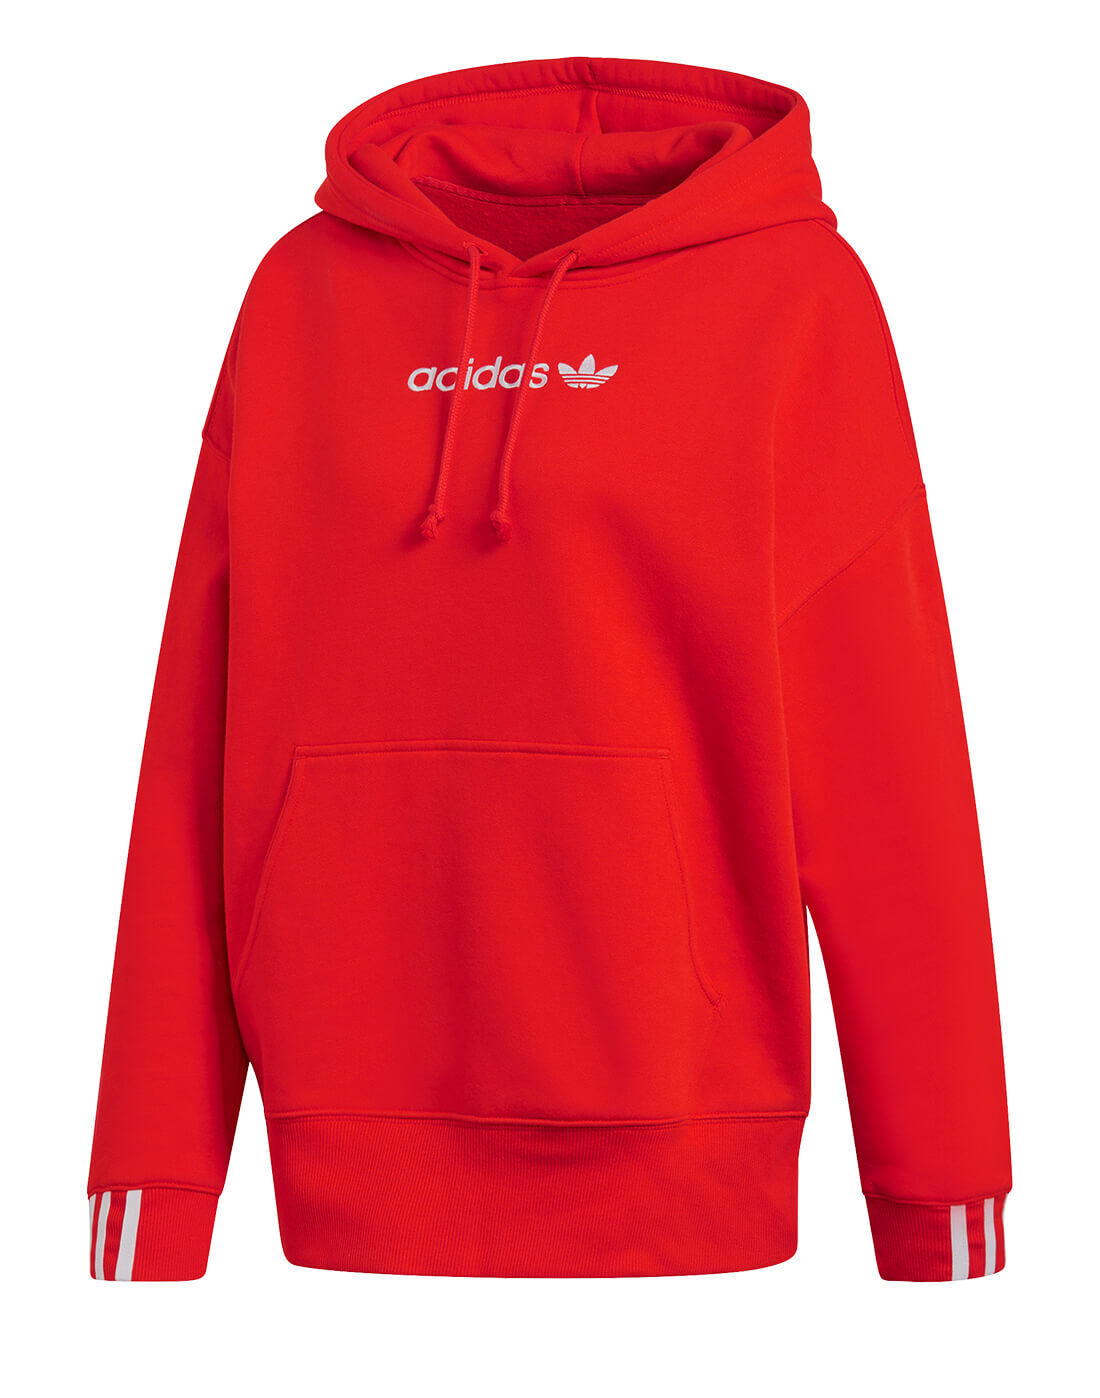 adidas originals red hoodie women's